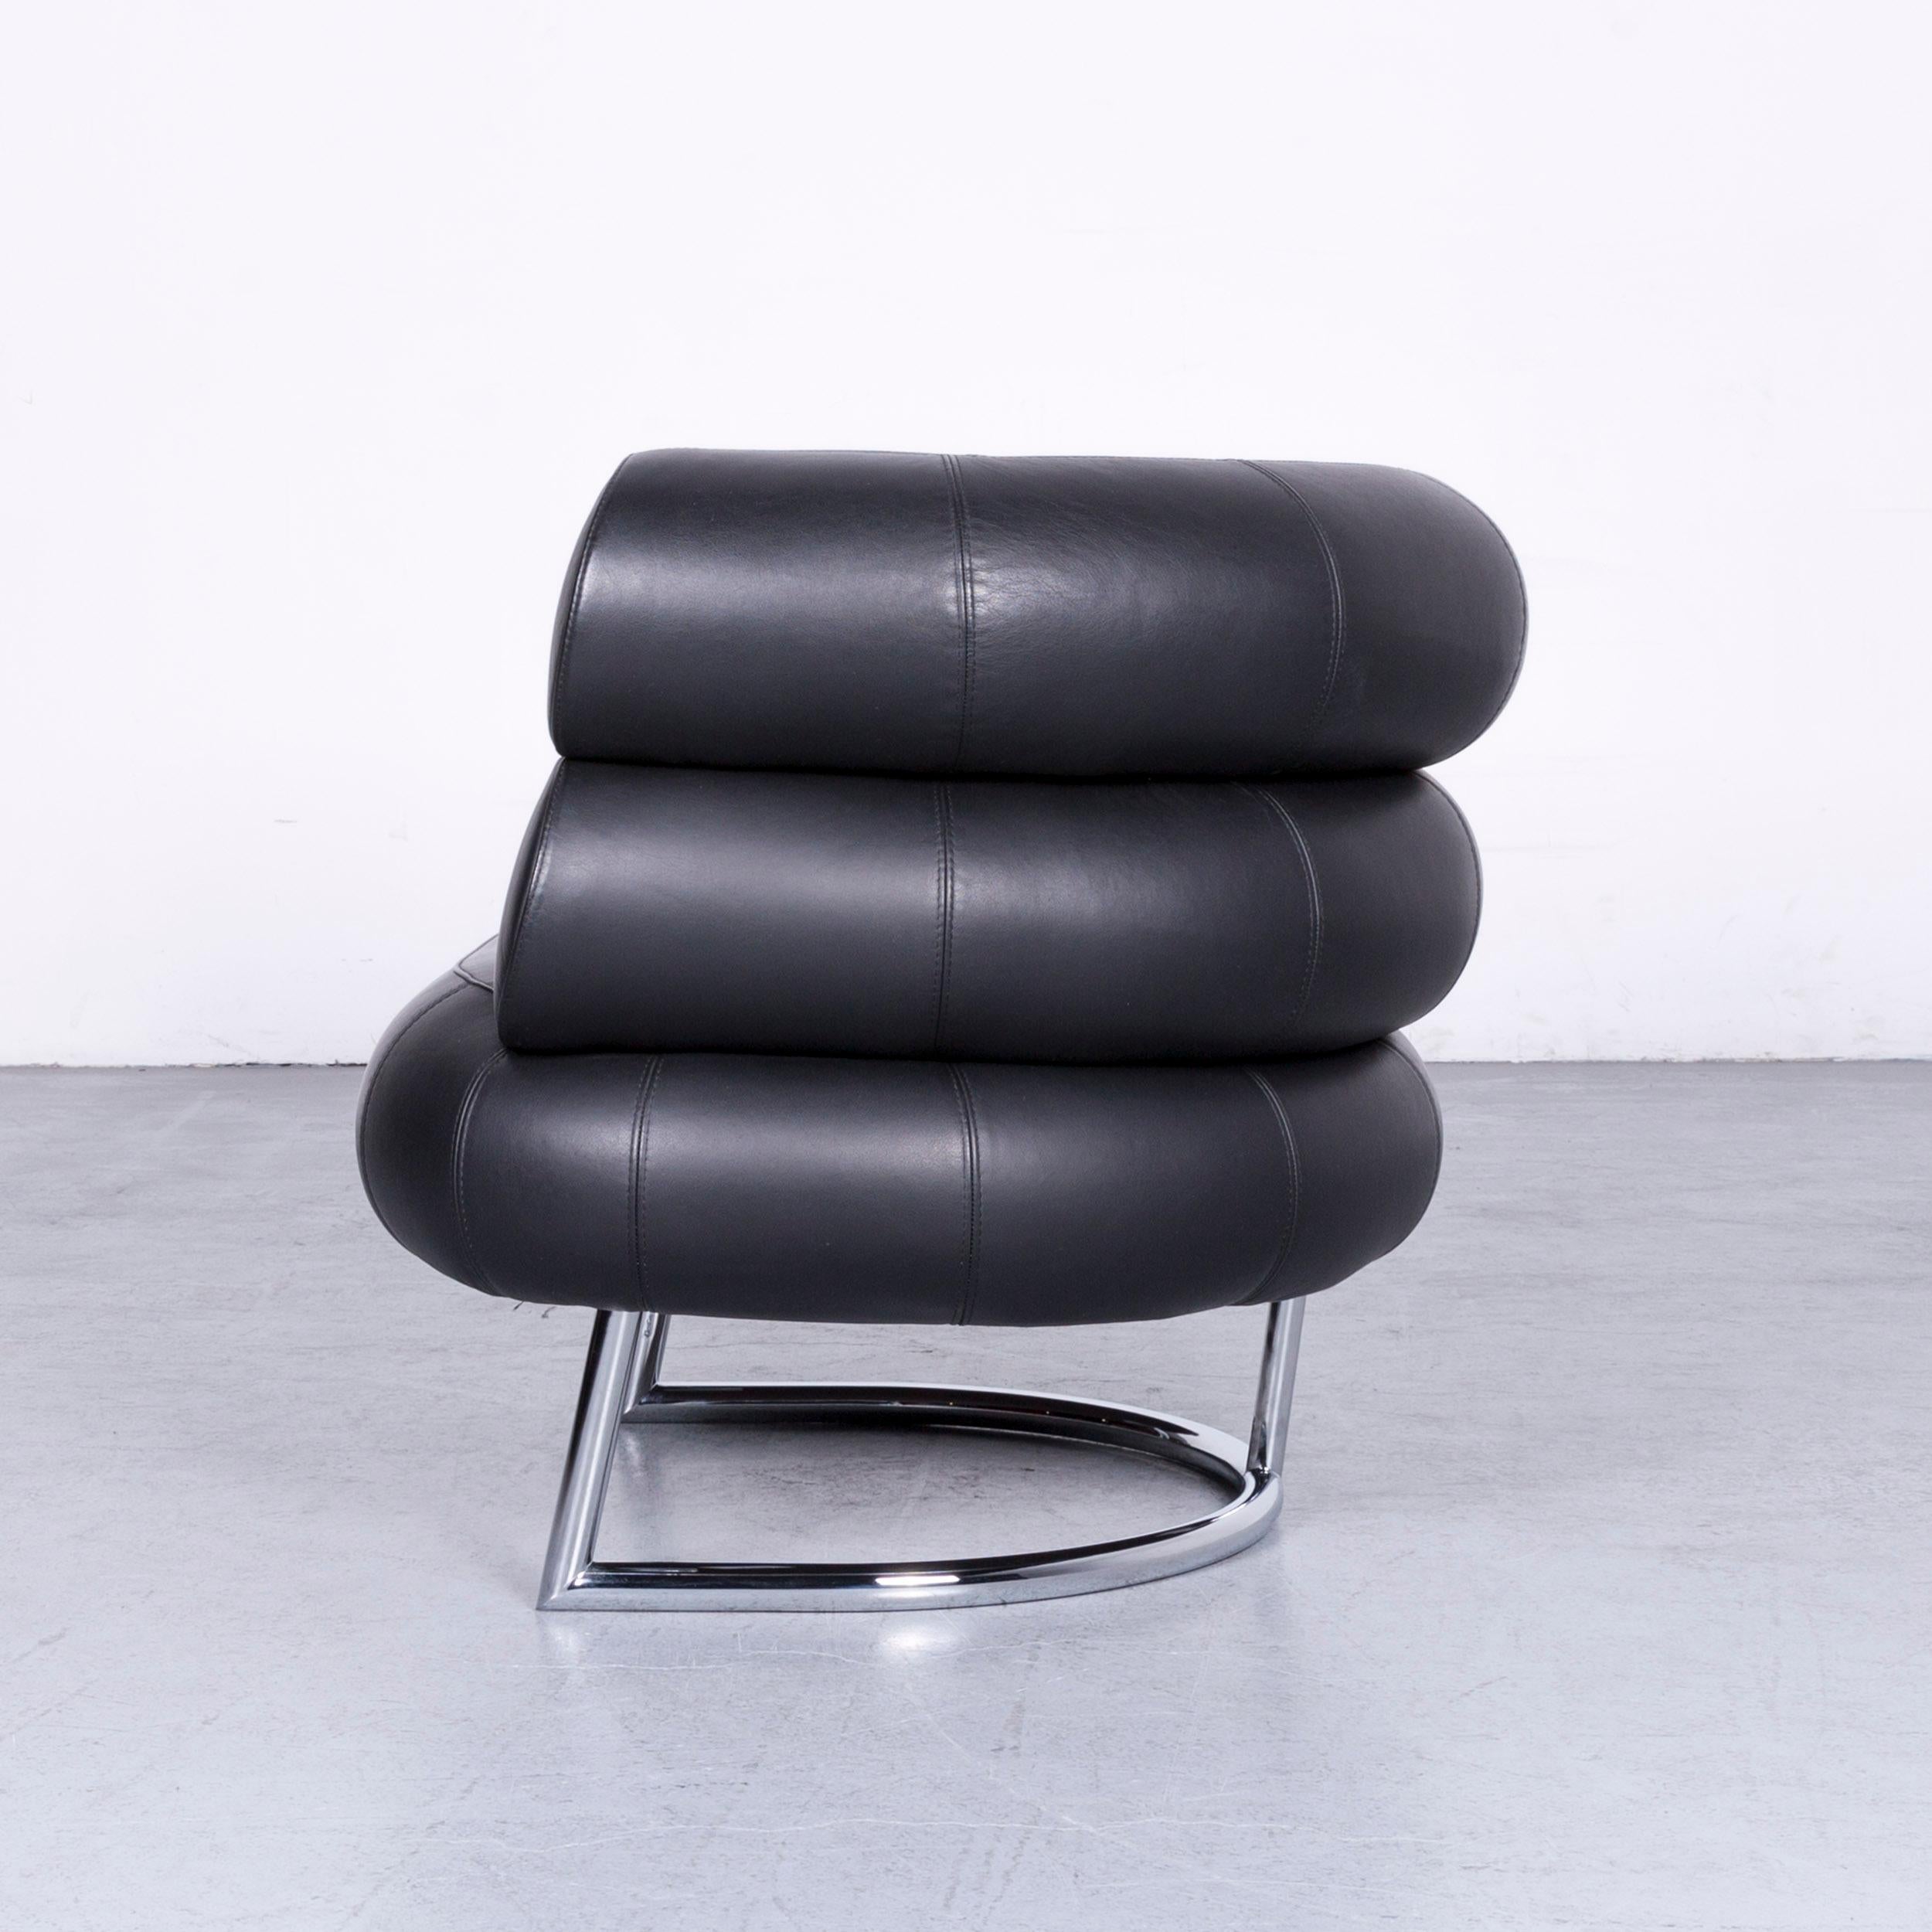 ClassiCon Bibendum Chair Designer Leather Armchair Black For Sale 3